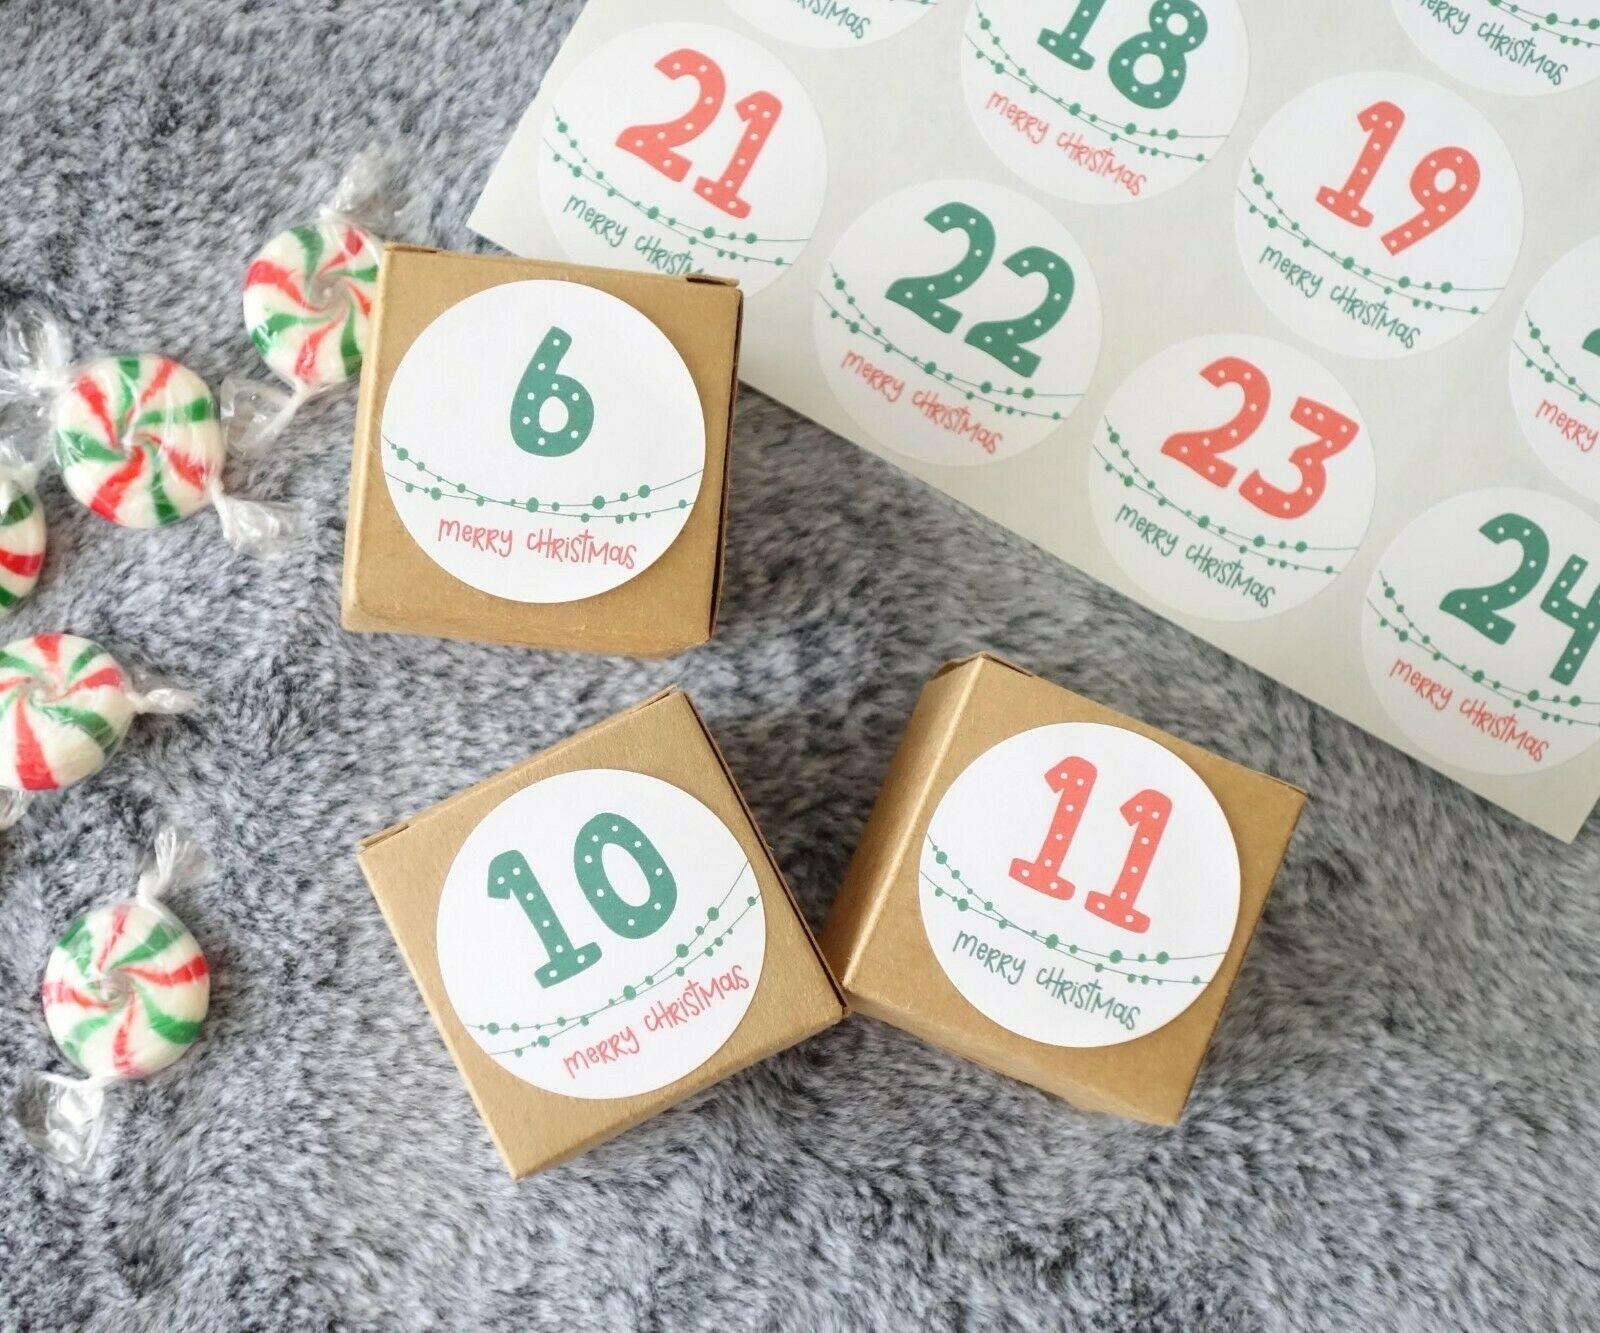 24 x Christmas Advent Boxes ($1.30 X 24 units)